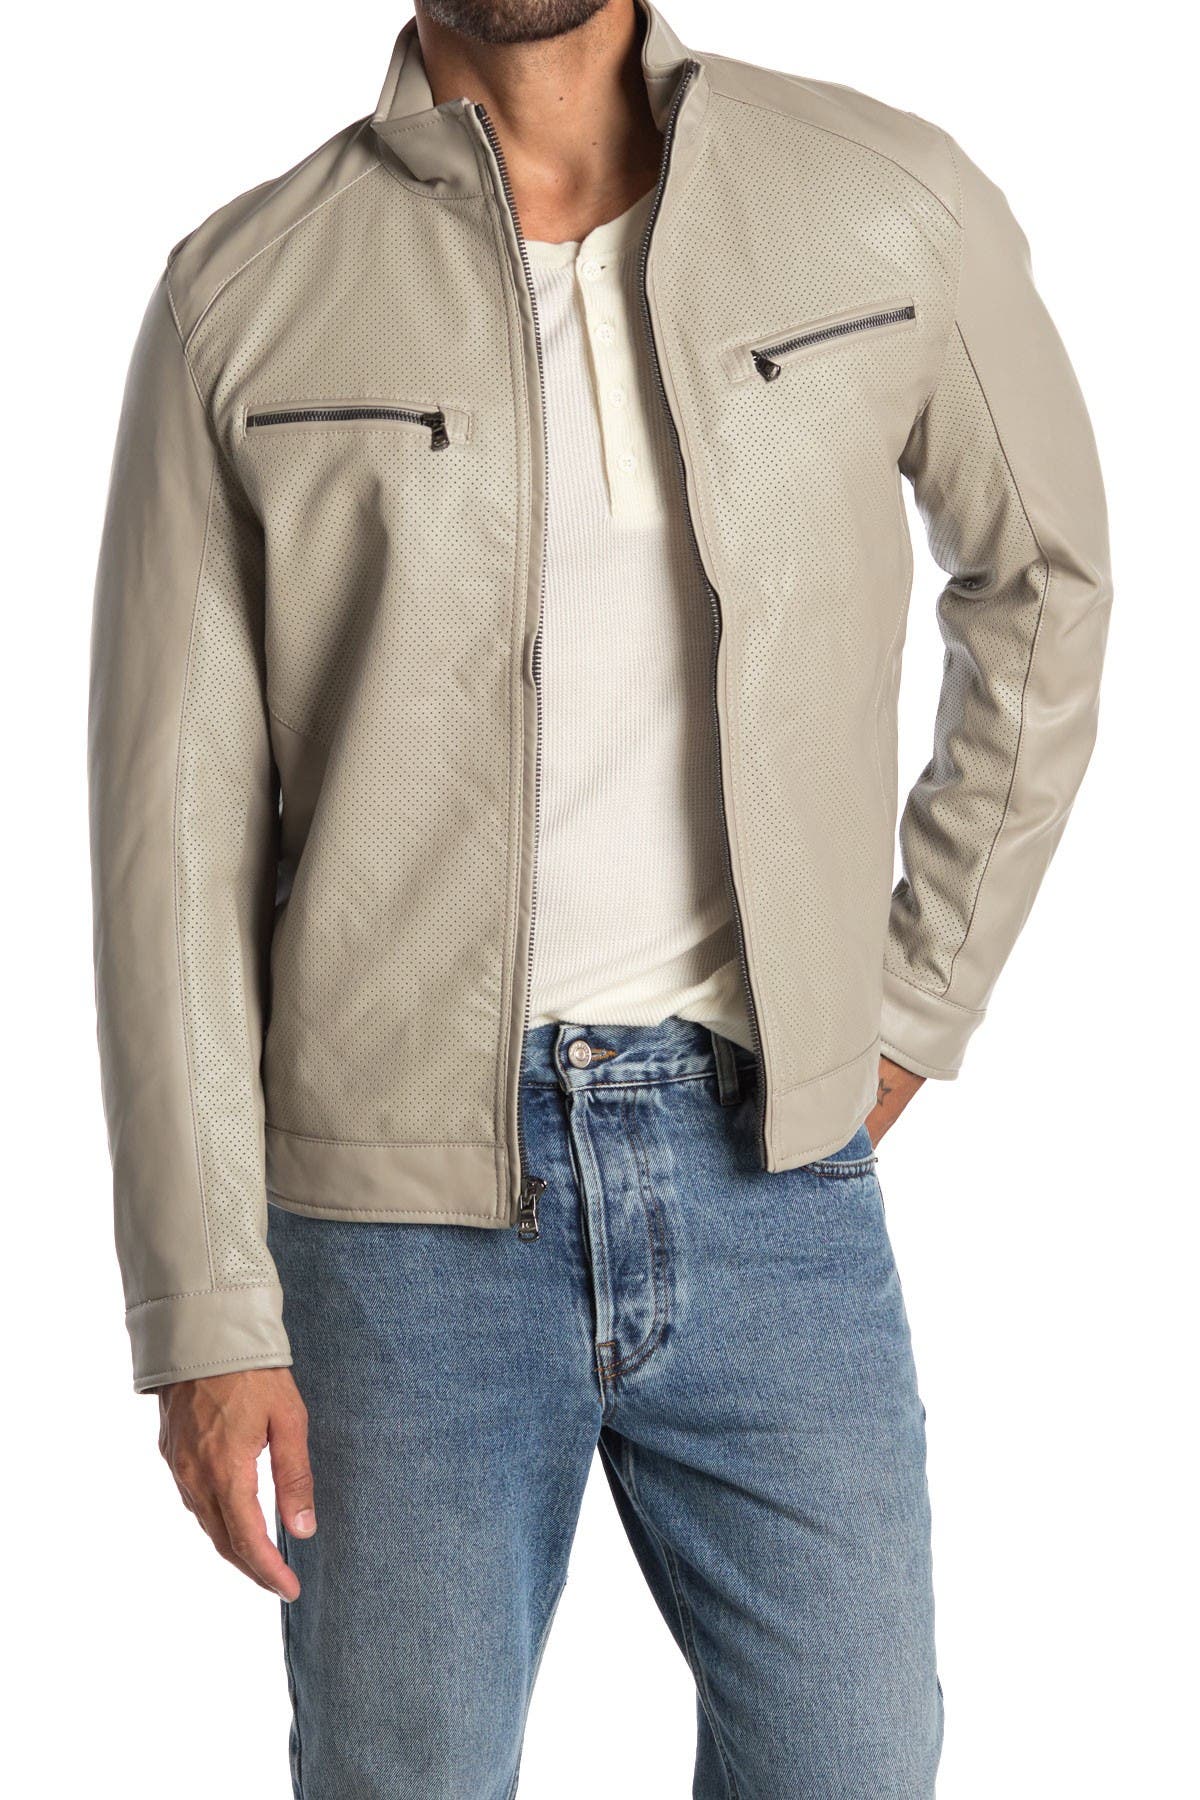 michael kors perforated leather jacket